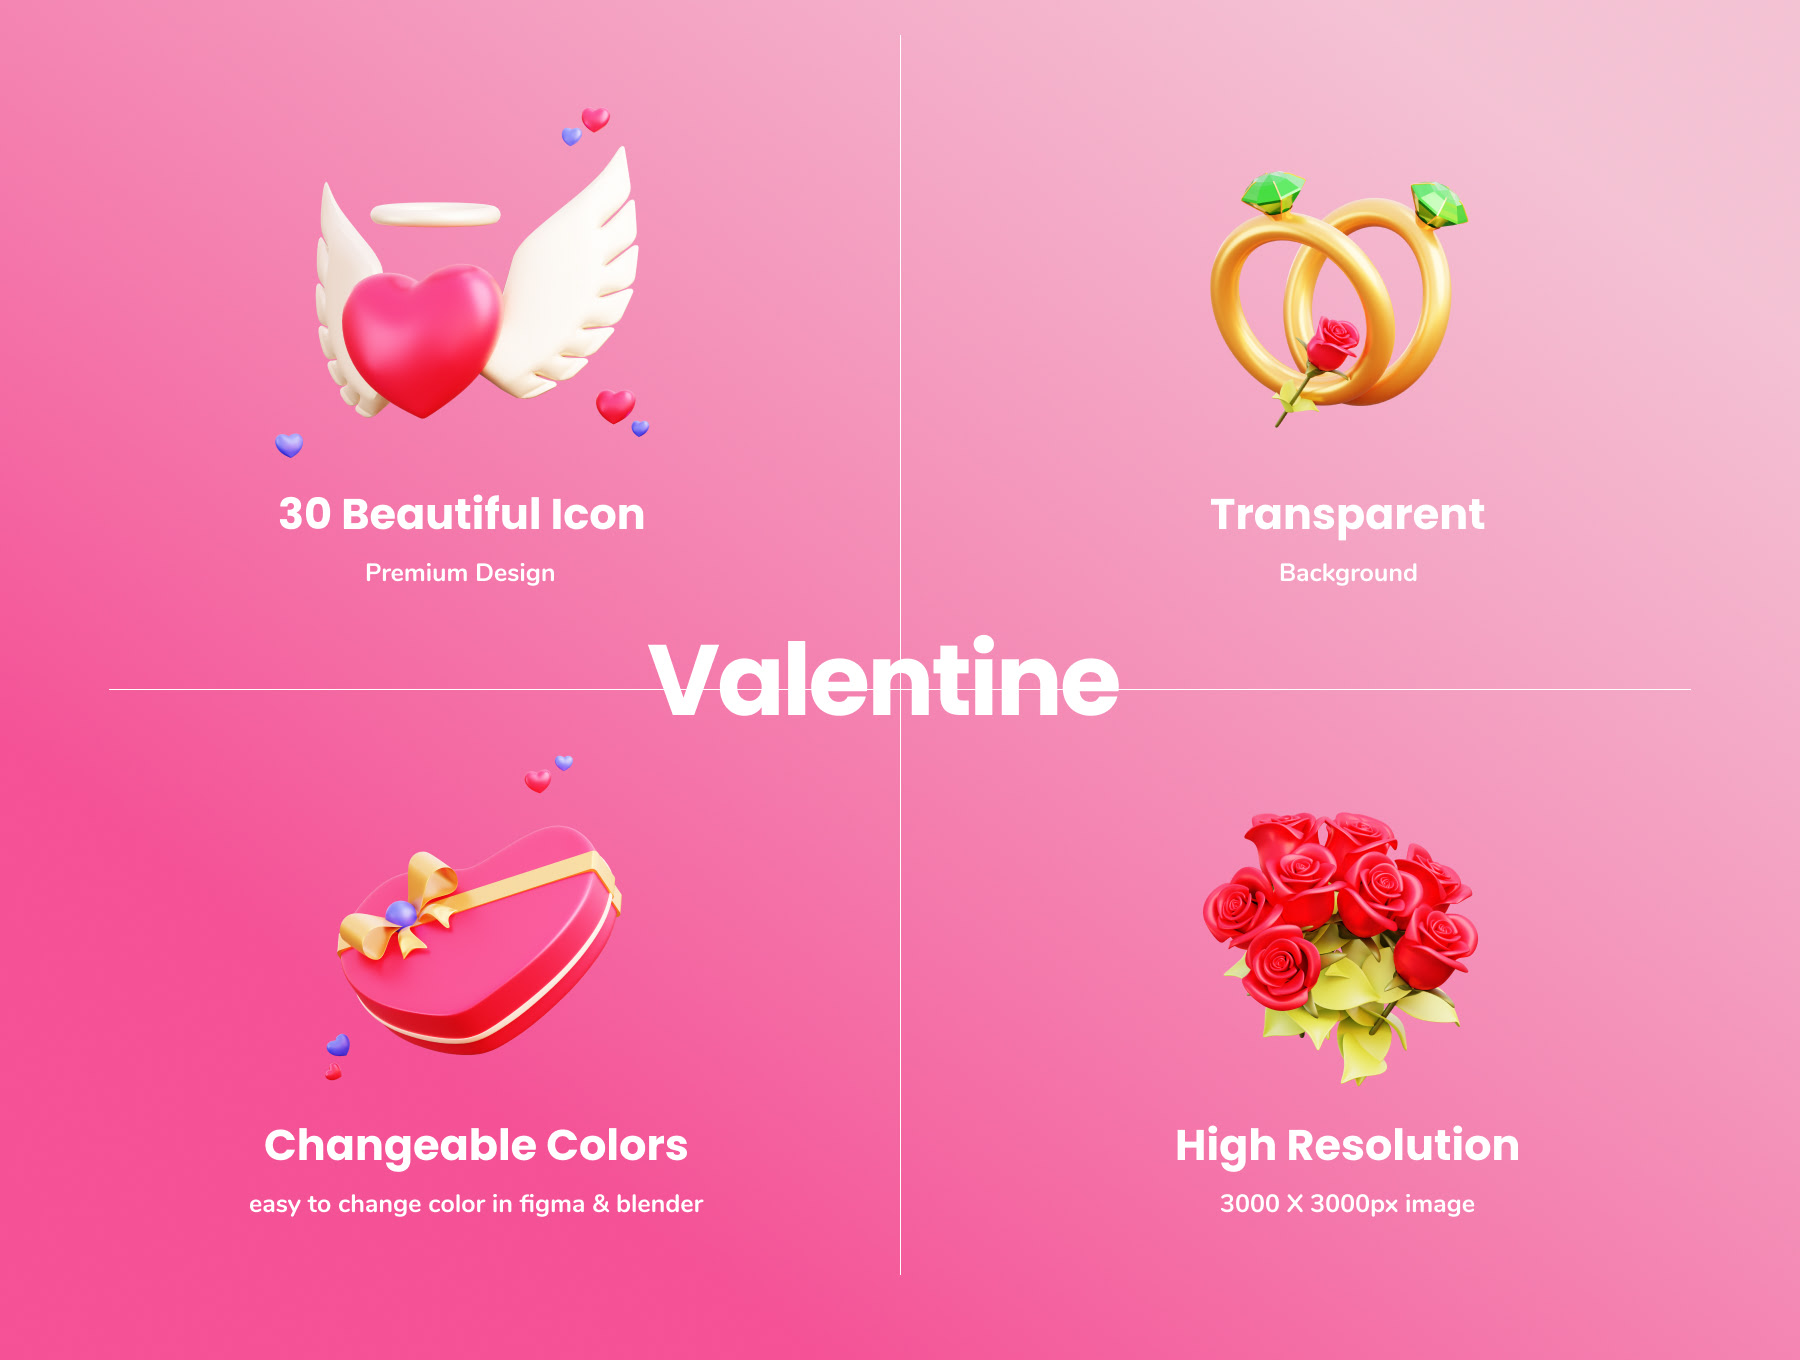 情人节-3D图标模型插画包 Valentine - 3D Illustration Icon Pack-3D/图标-到位啦UI